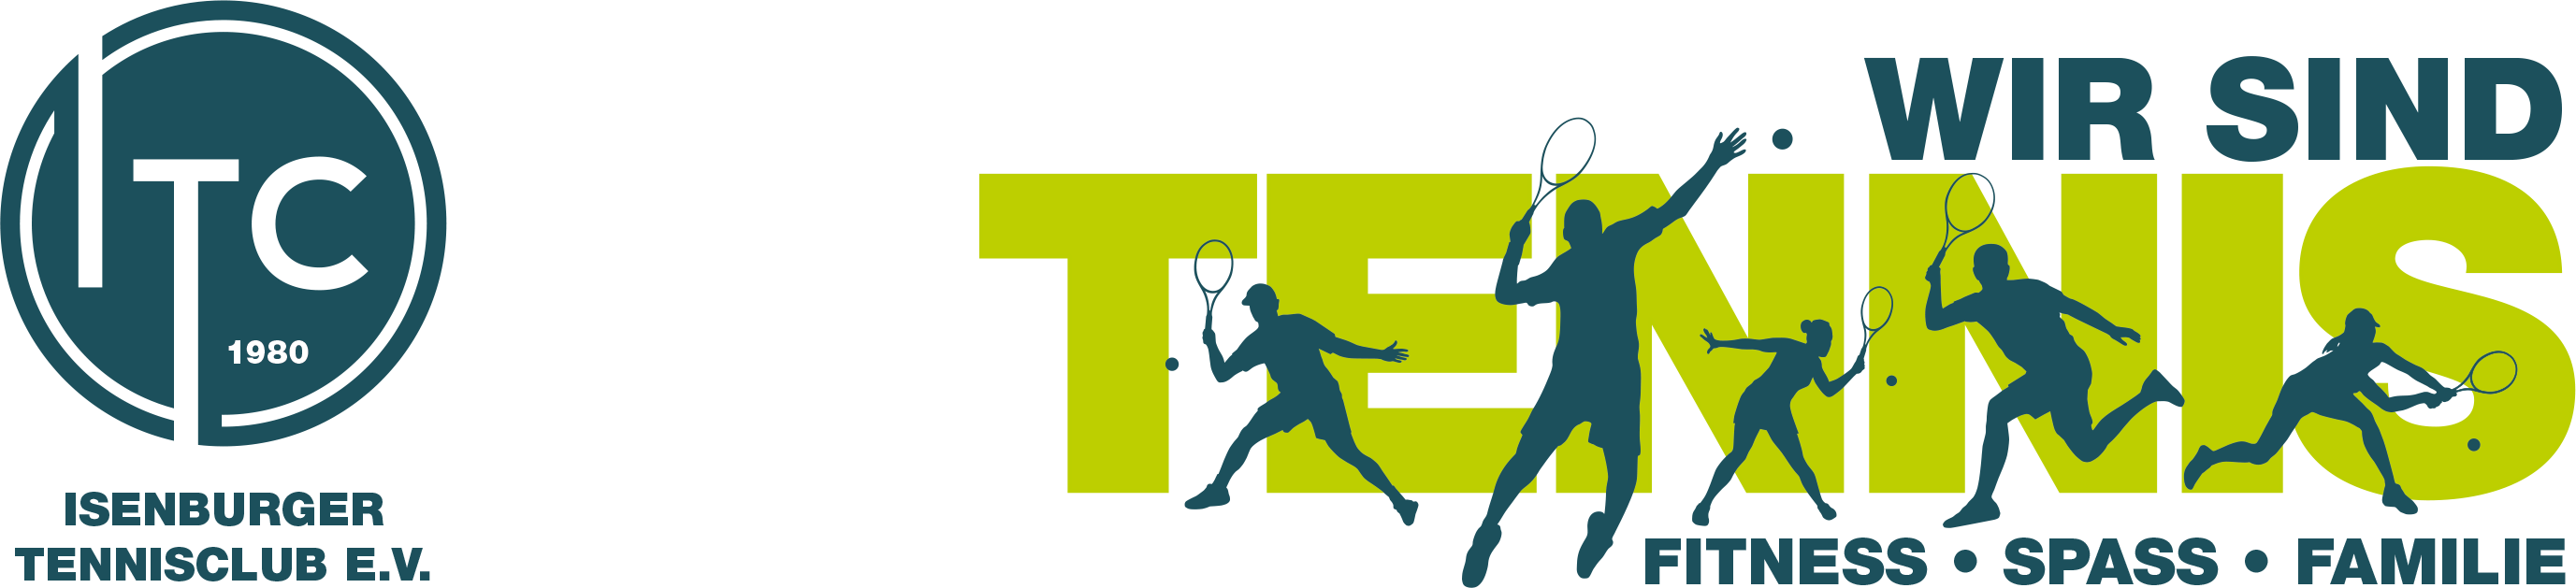 ISENBURGER TENNISCLUB e.V. Wir sind Tennis!